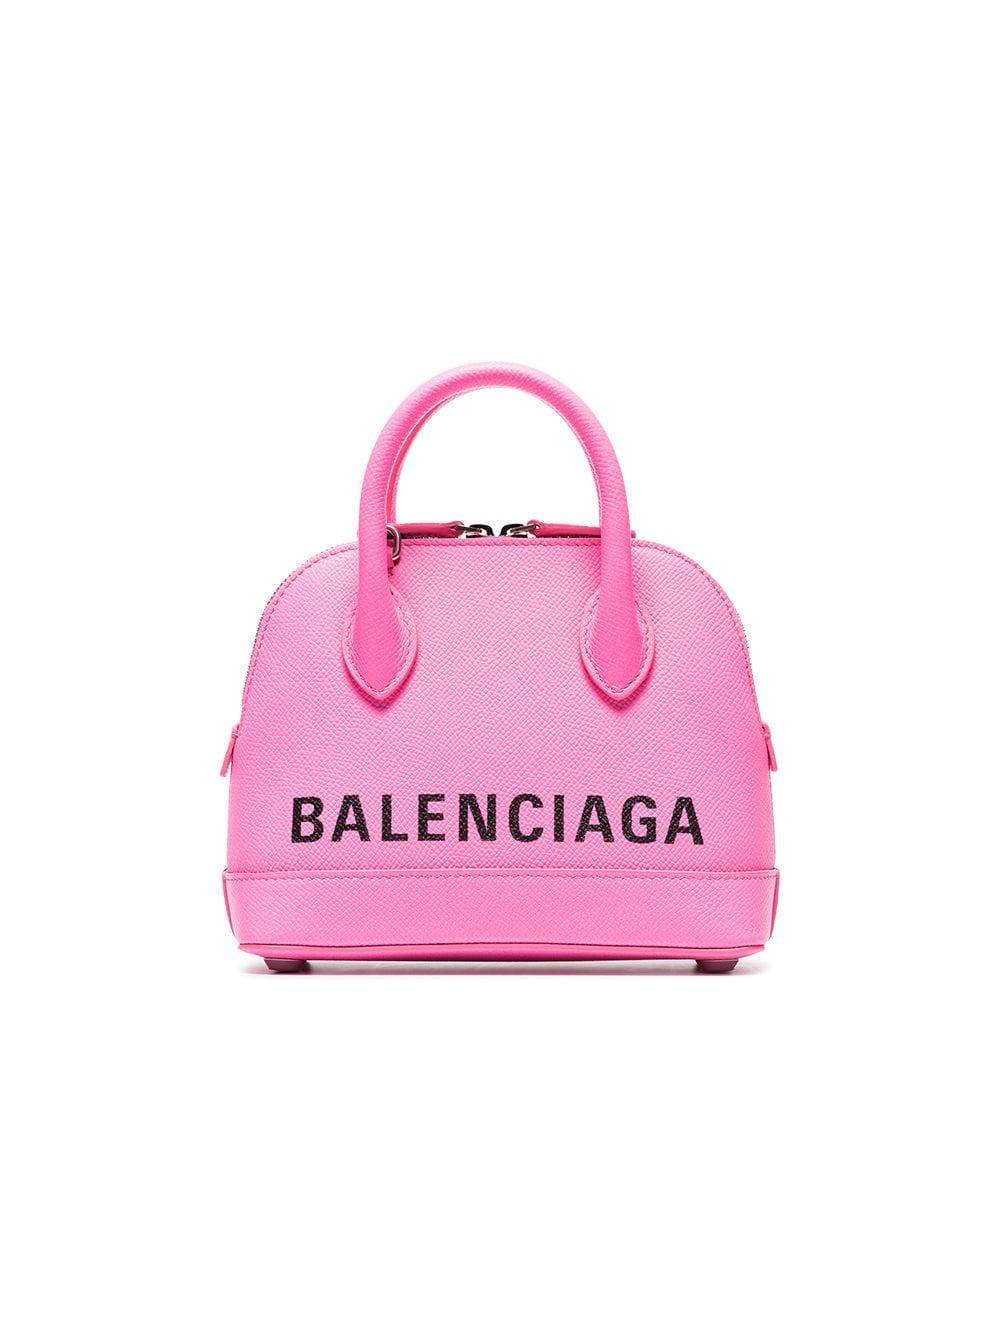 Balenciaga Xxs Ville Leather Top Handle Bag in Pink | Lyst Australia